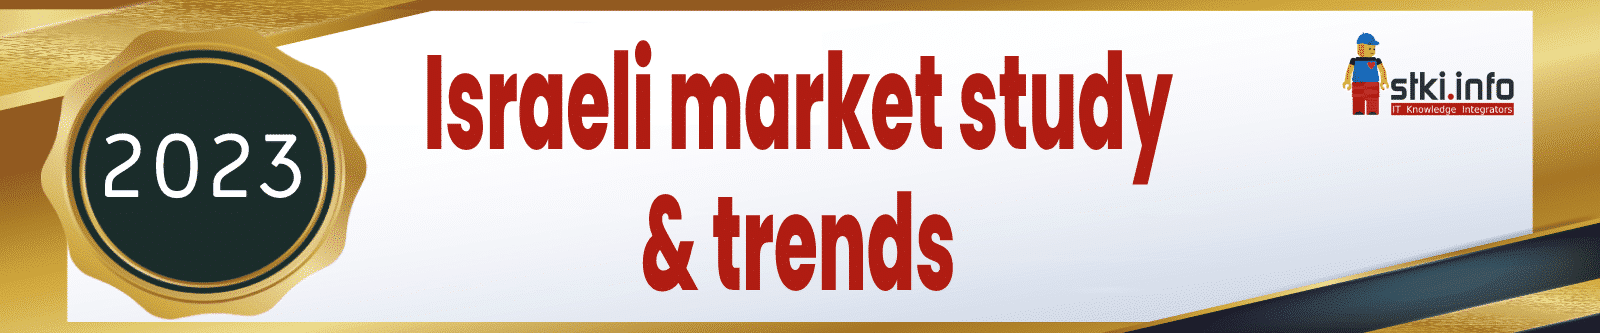 israeli market study trends